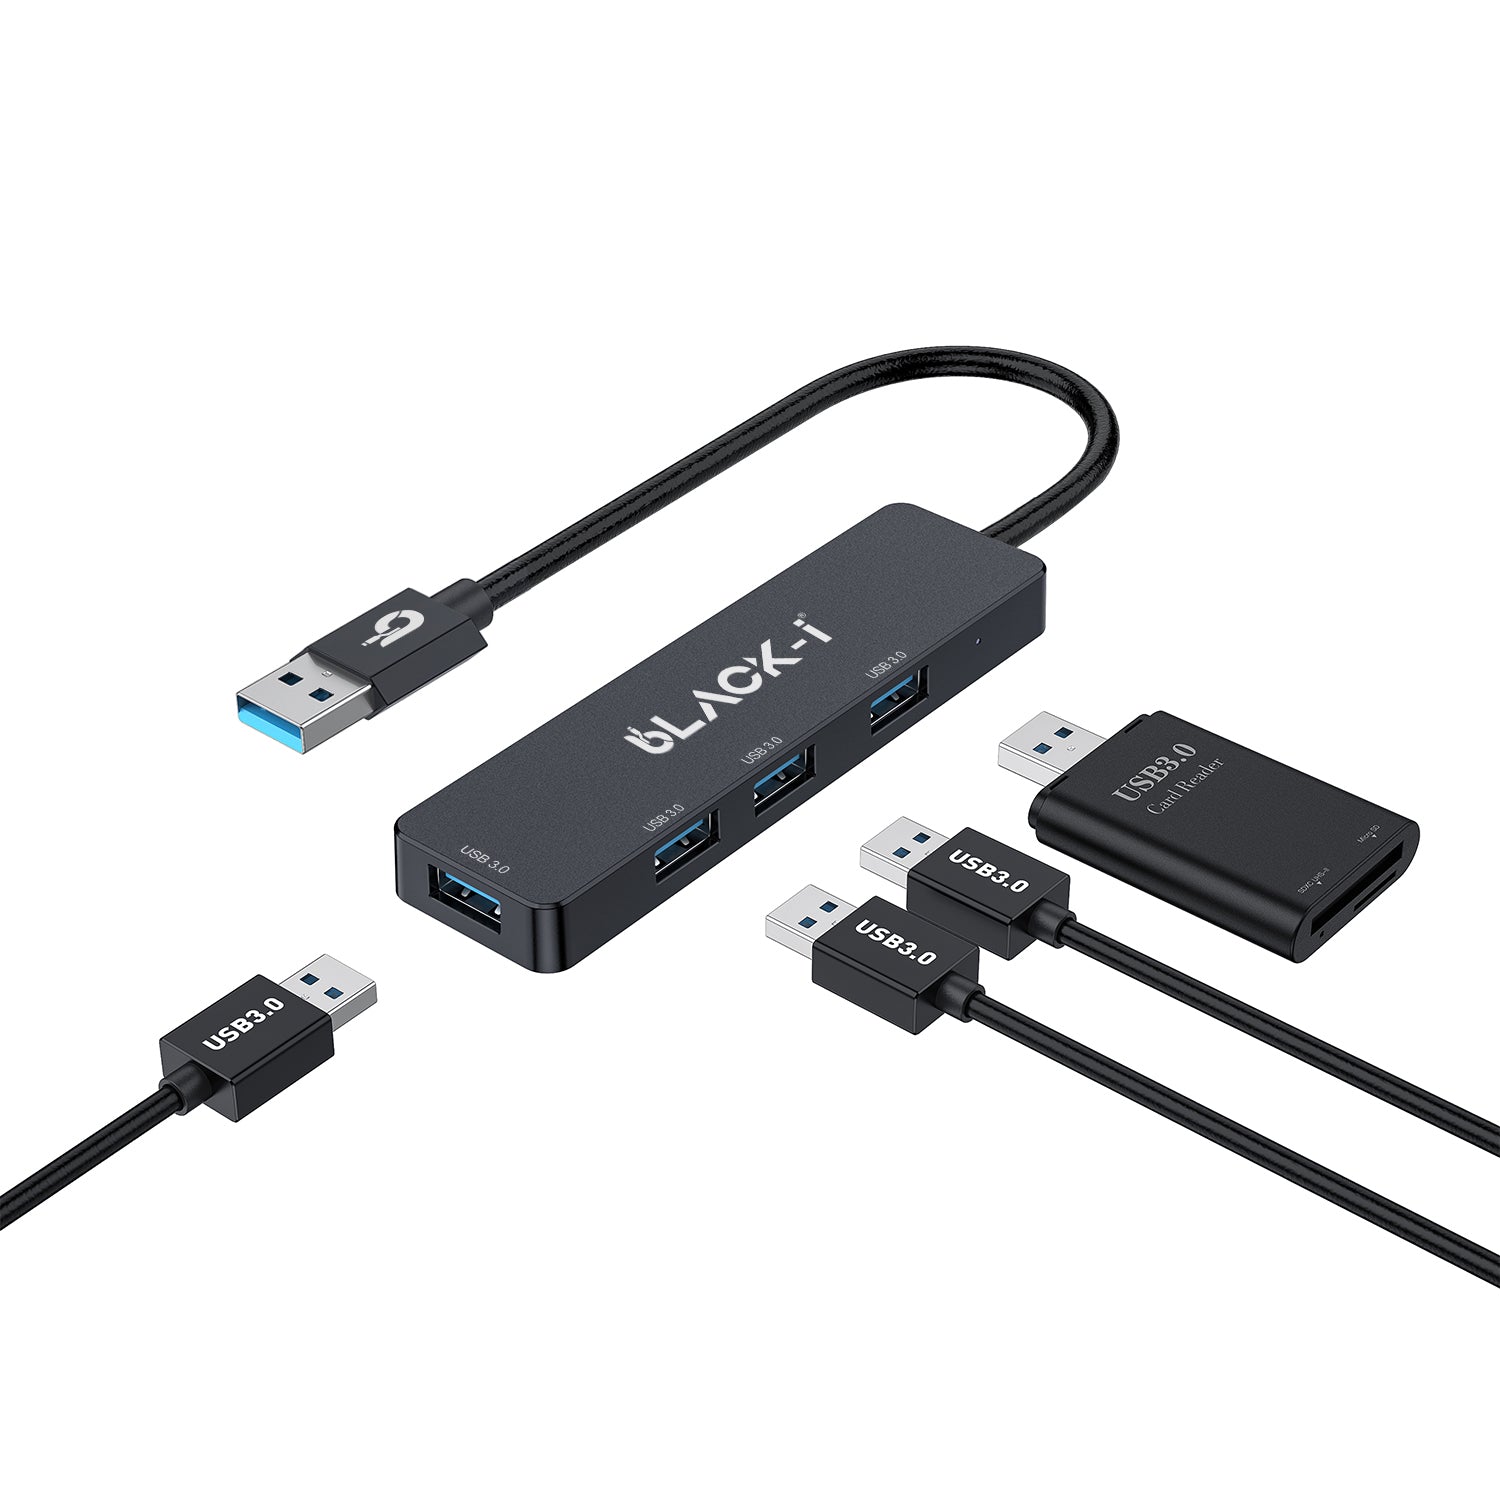 Black-i USB 3.0 4-Port Hub